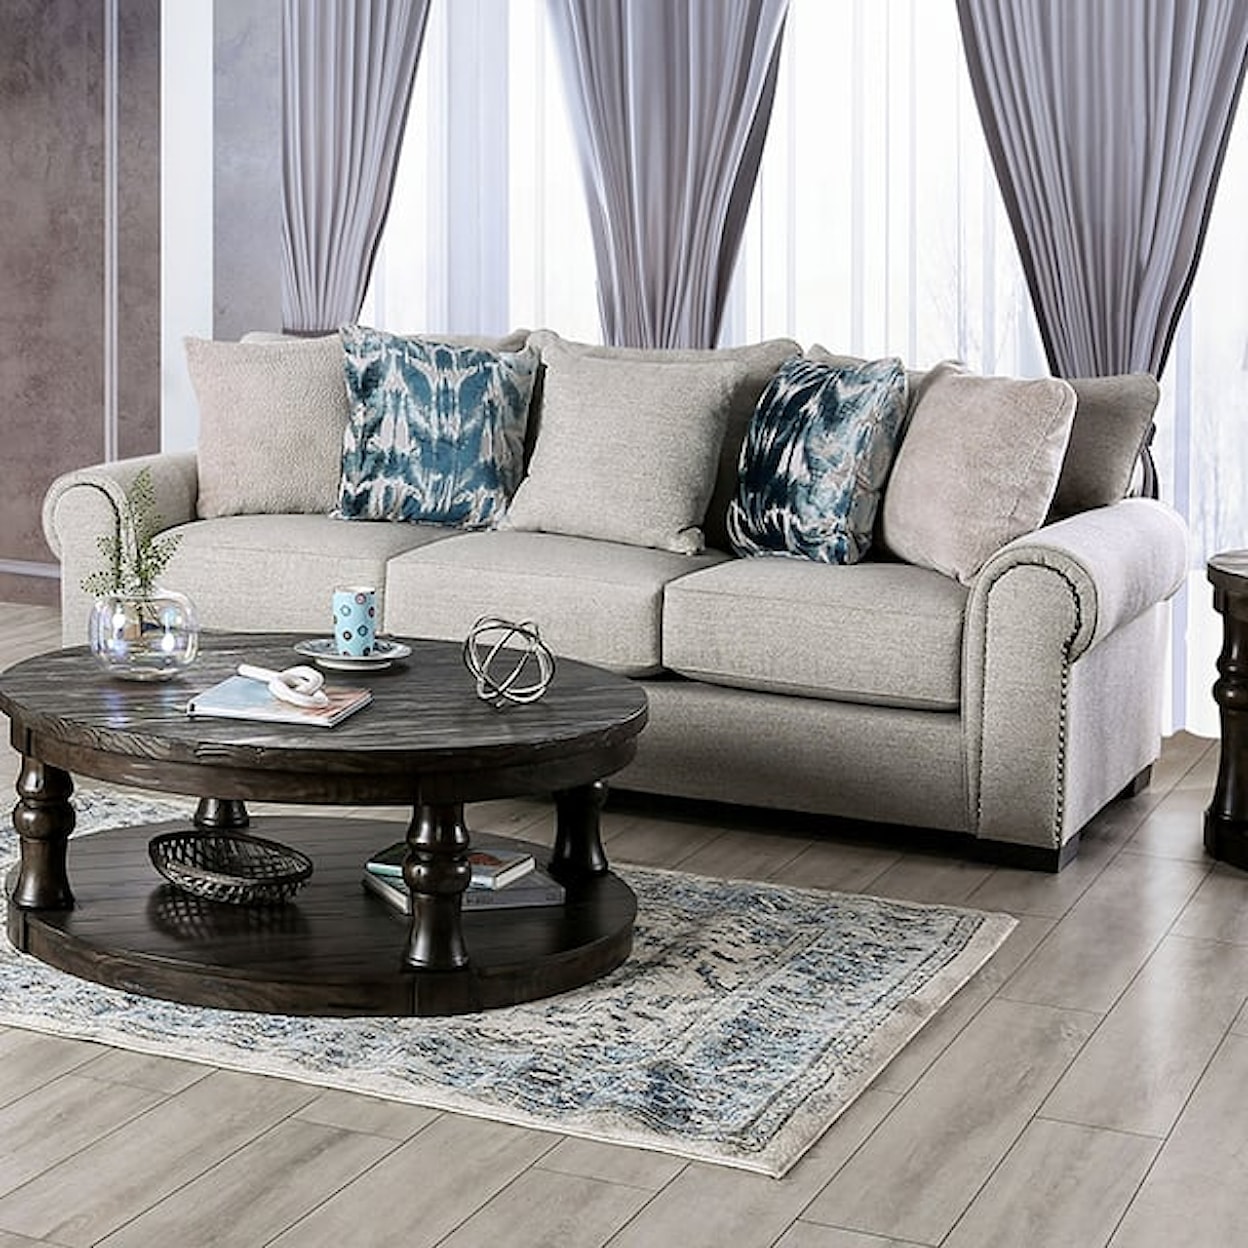 Furniture of America - FOA Laredo 2-Piece Living Room Set